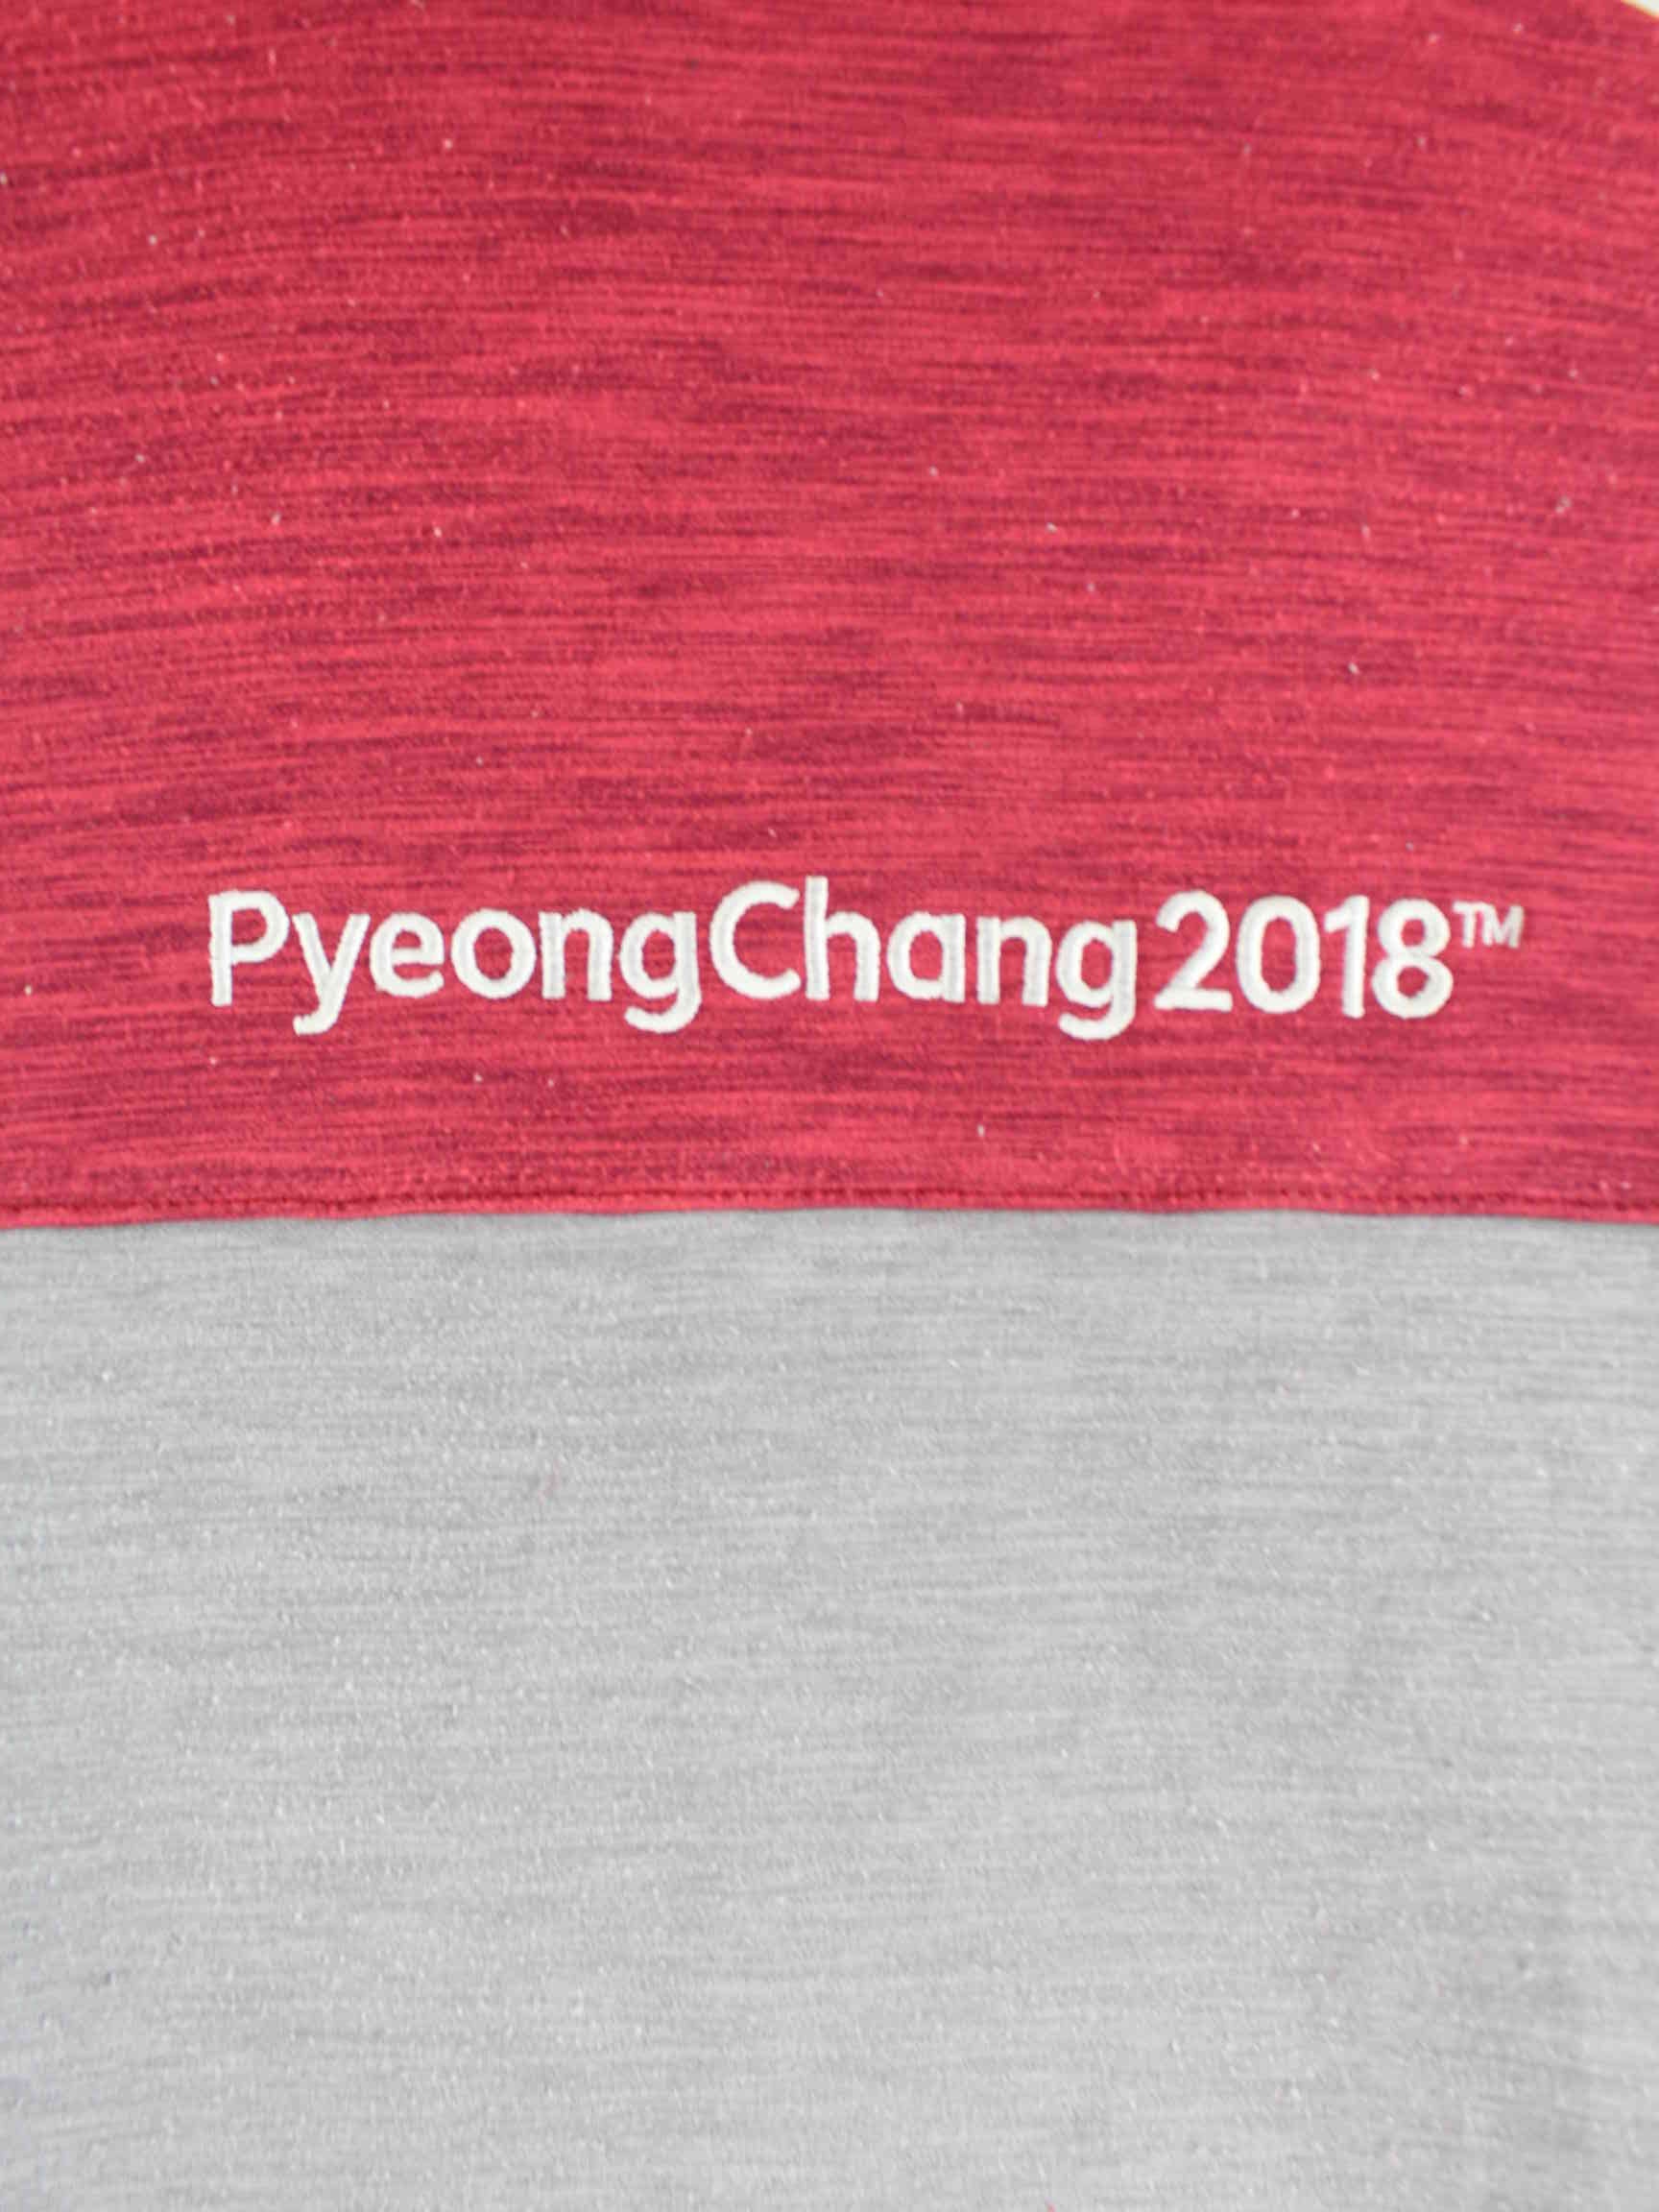 The North Face PYeongChang 2018 Jacke Grau S (detail image 2)